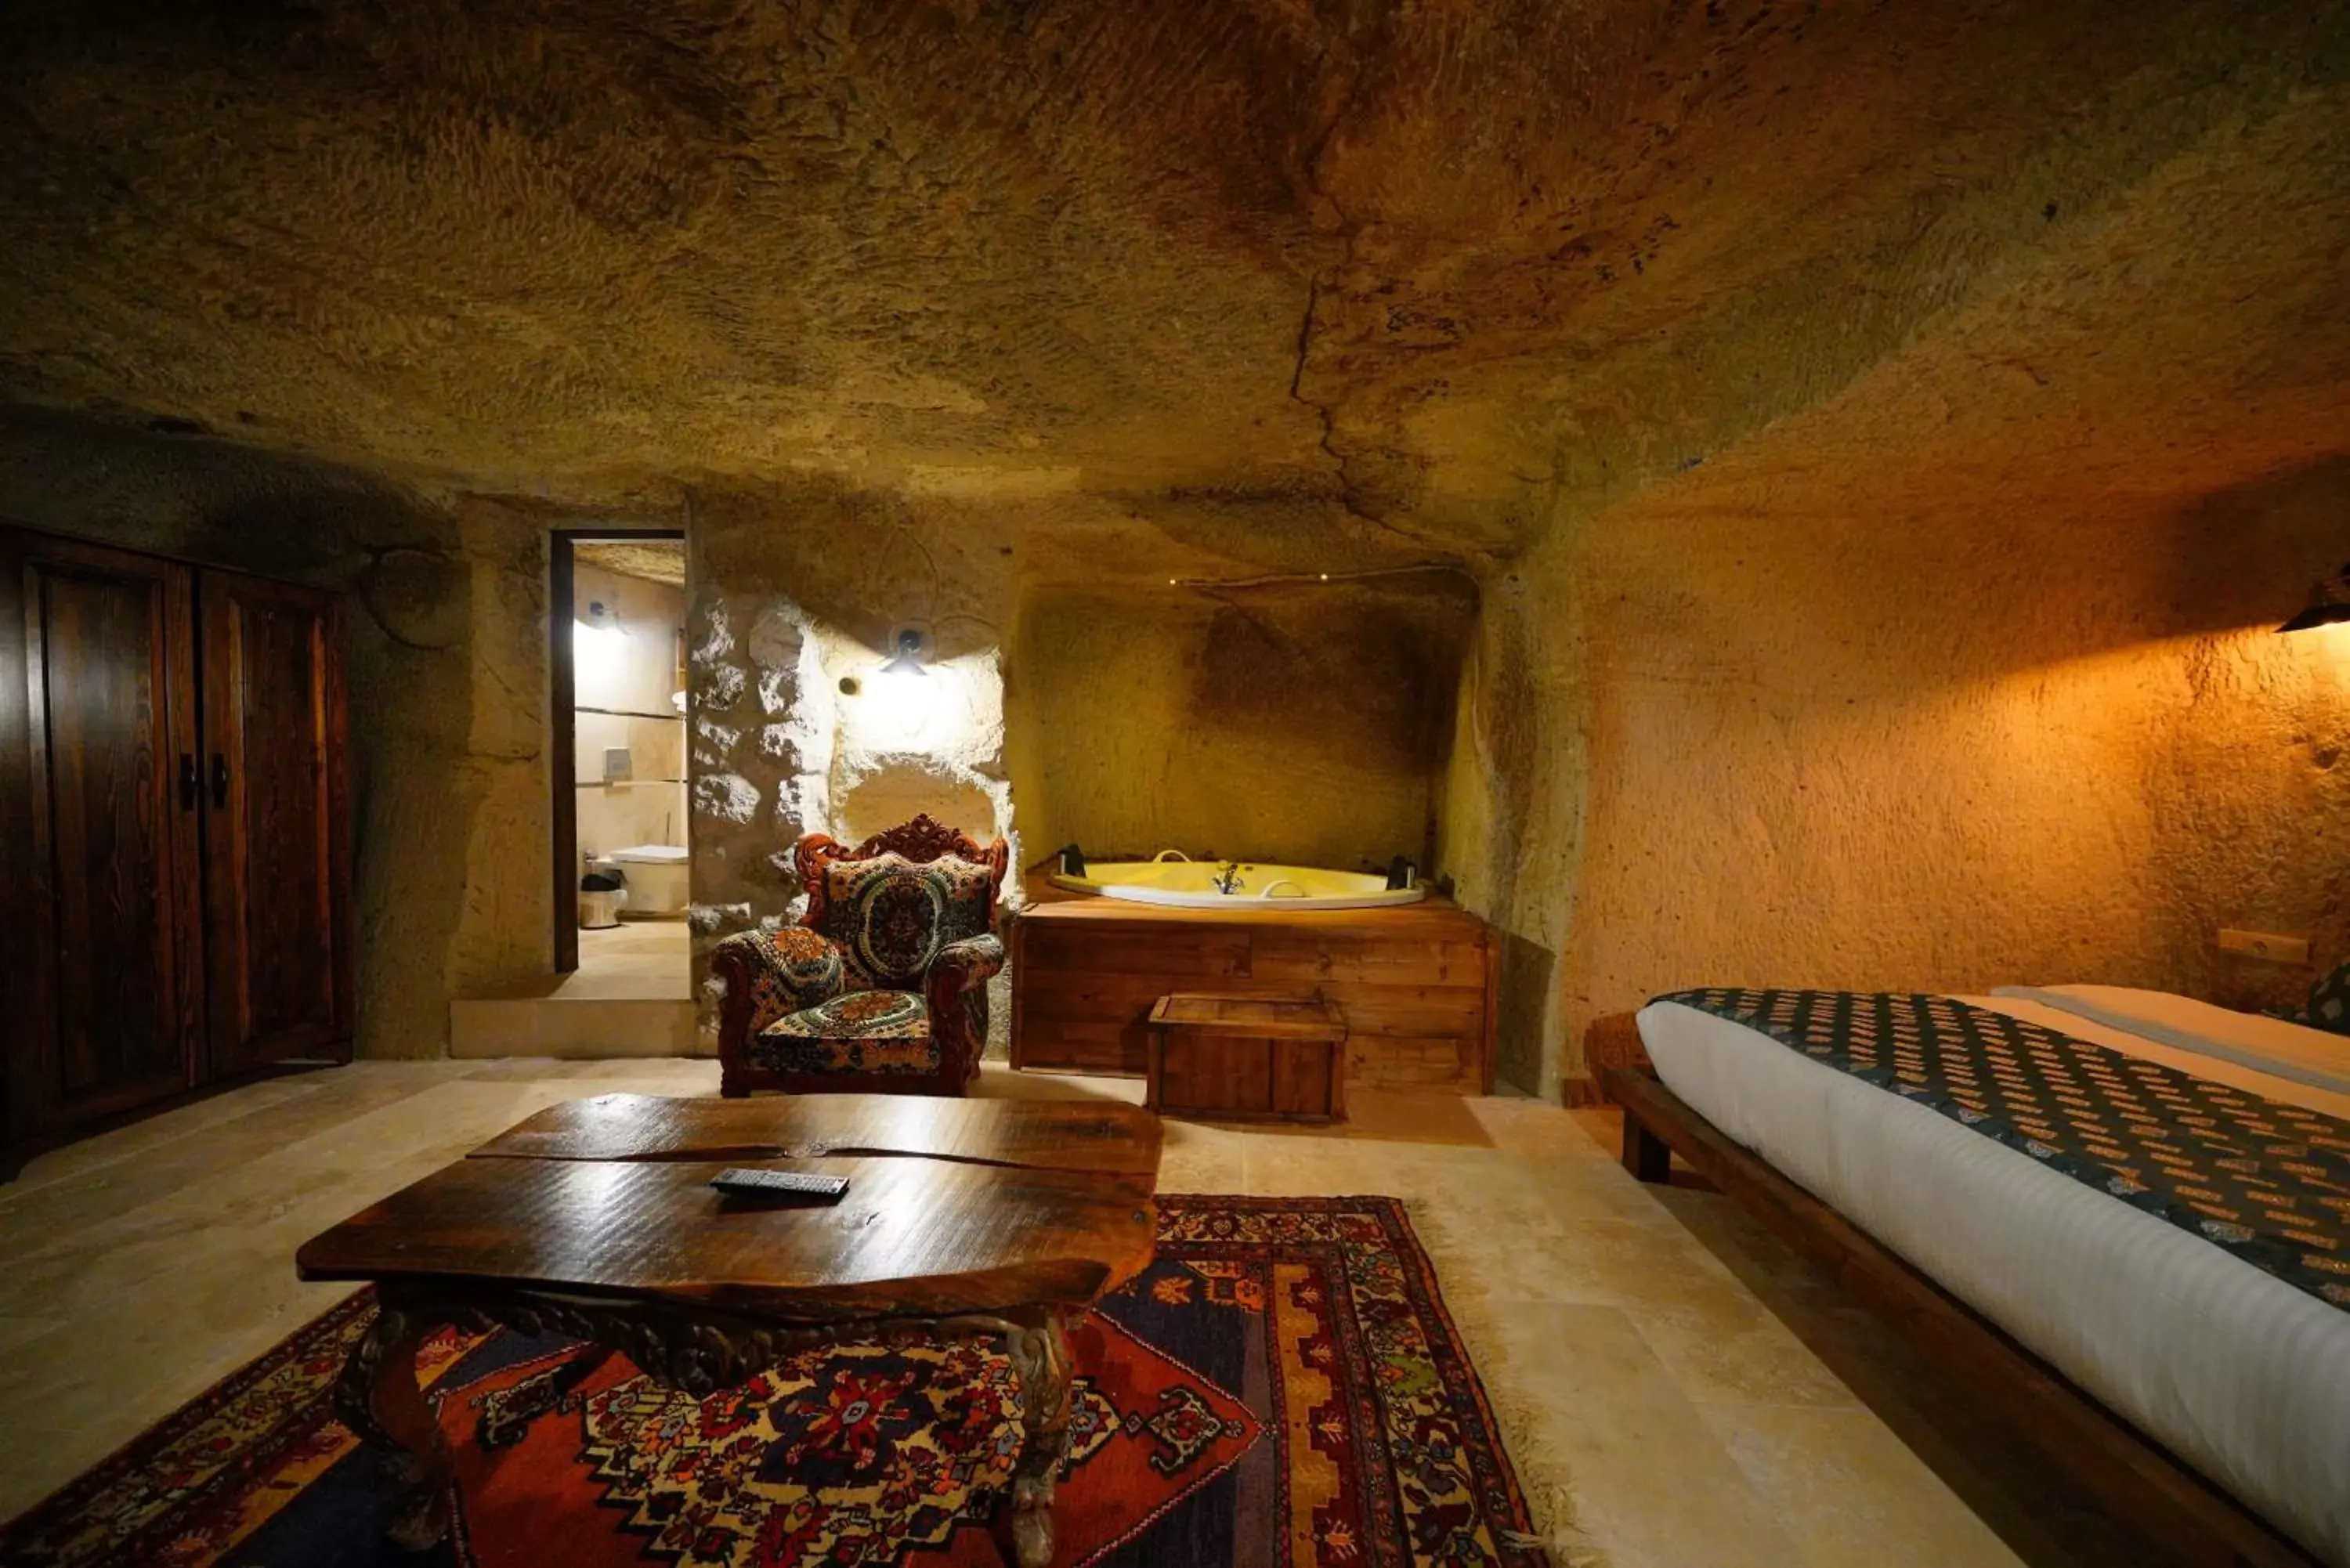 Bath in Cappadocia Nar Cave House & Hot Swimming Pool